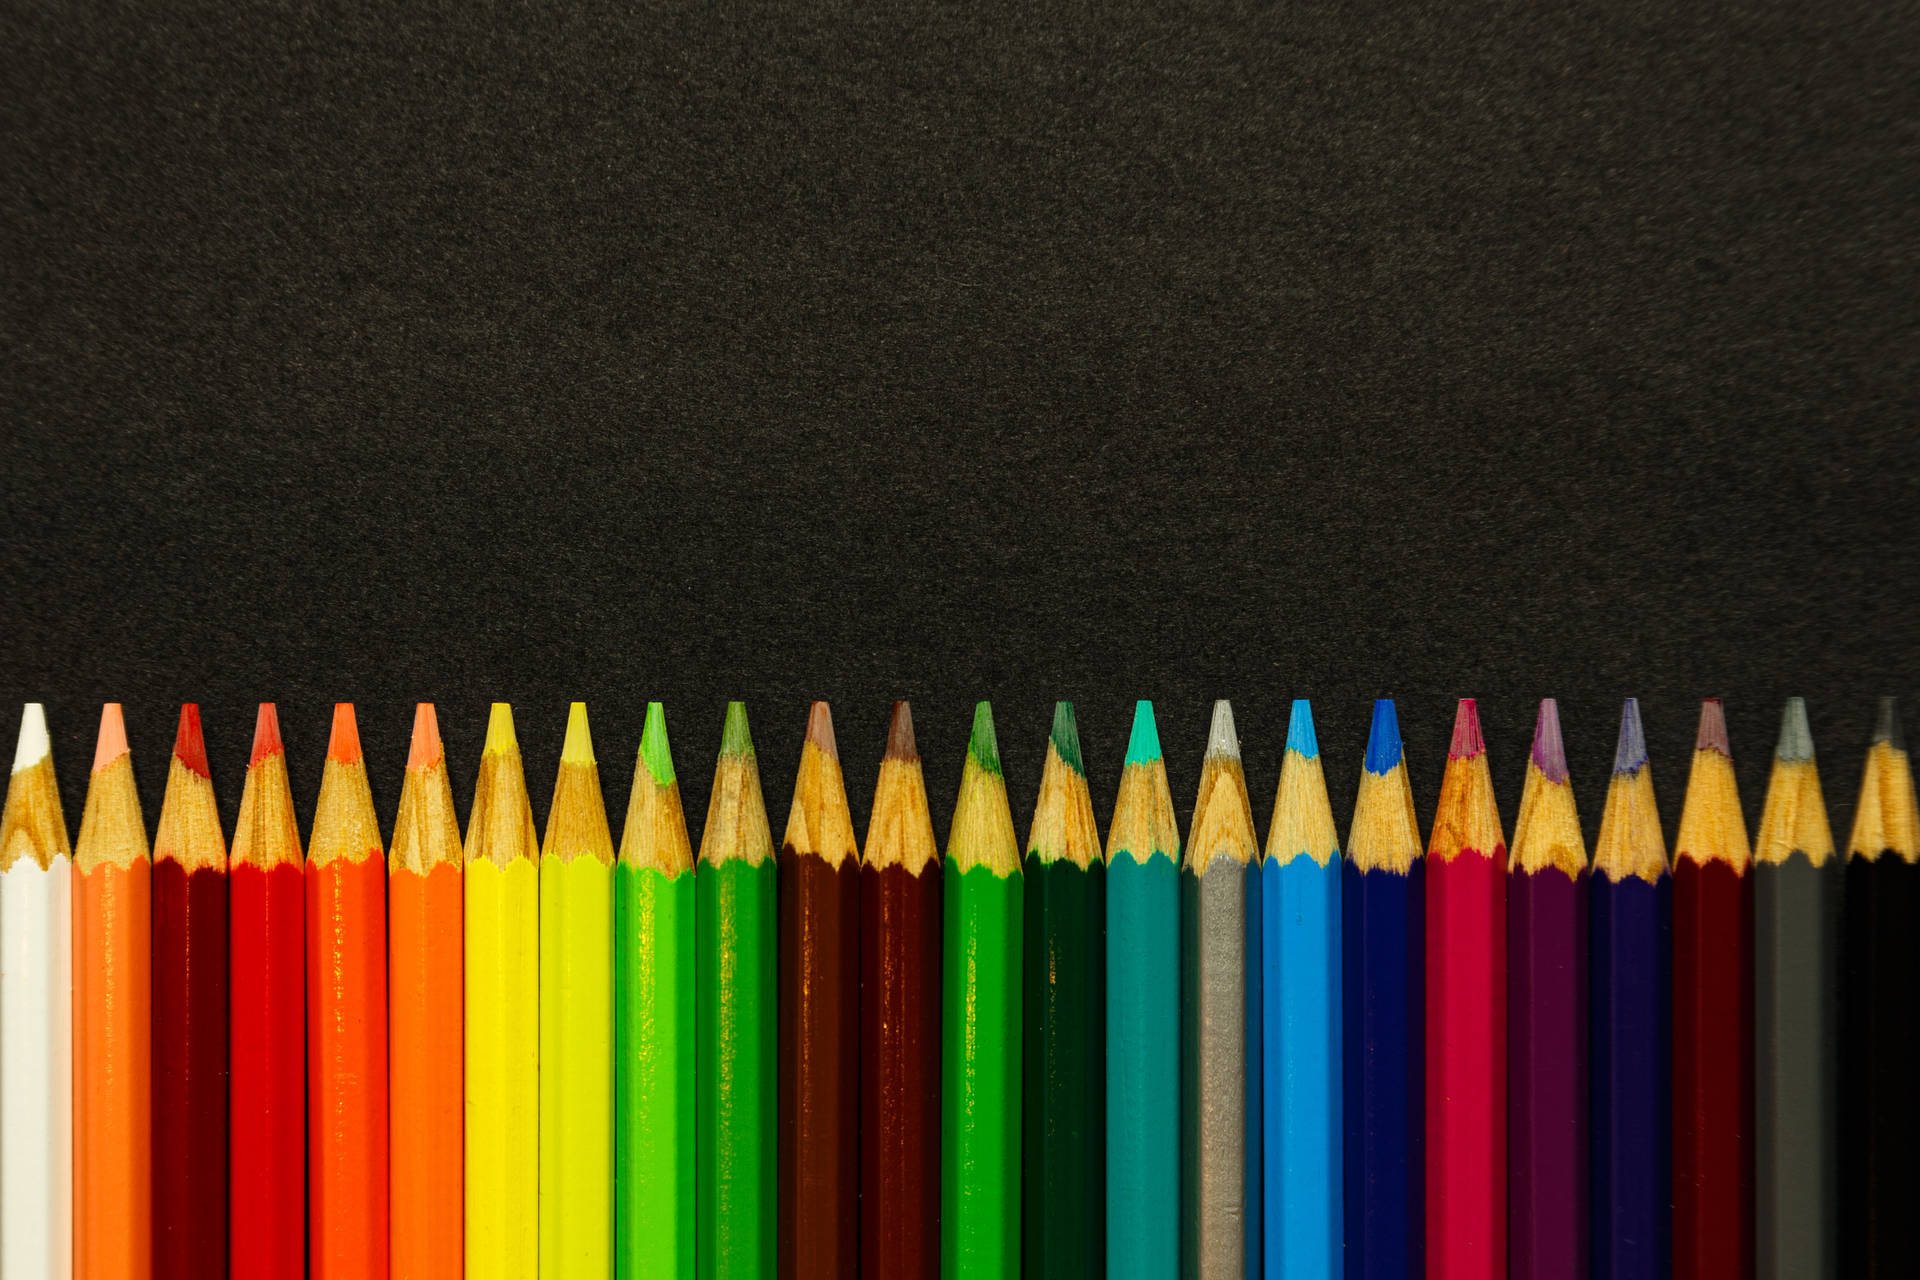 Colored Sharp Pencils Against Black Surface